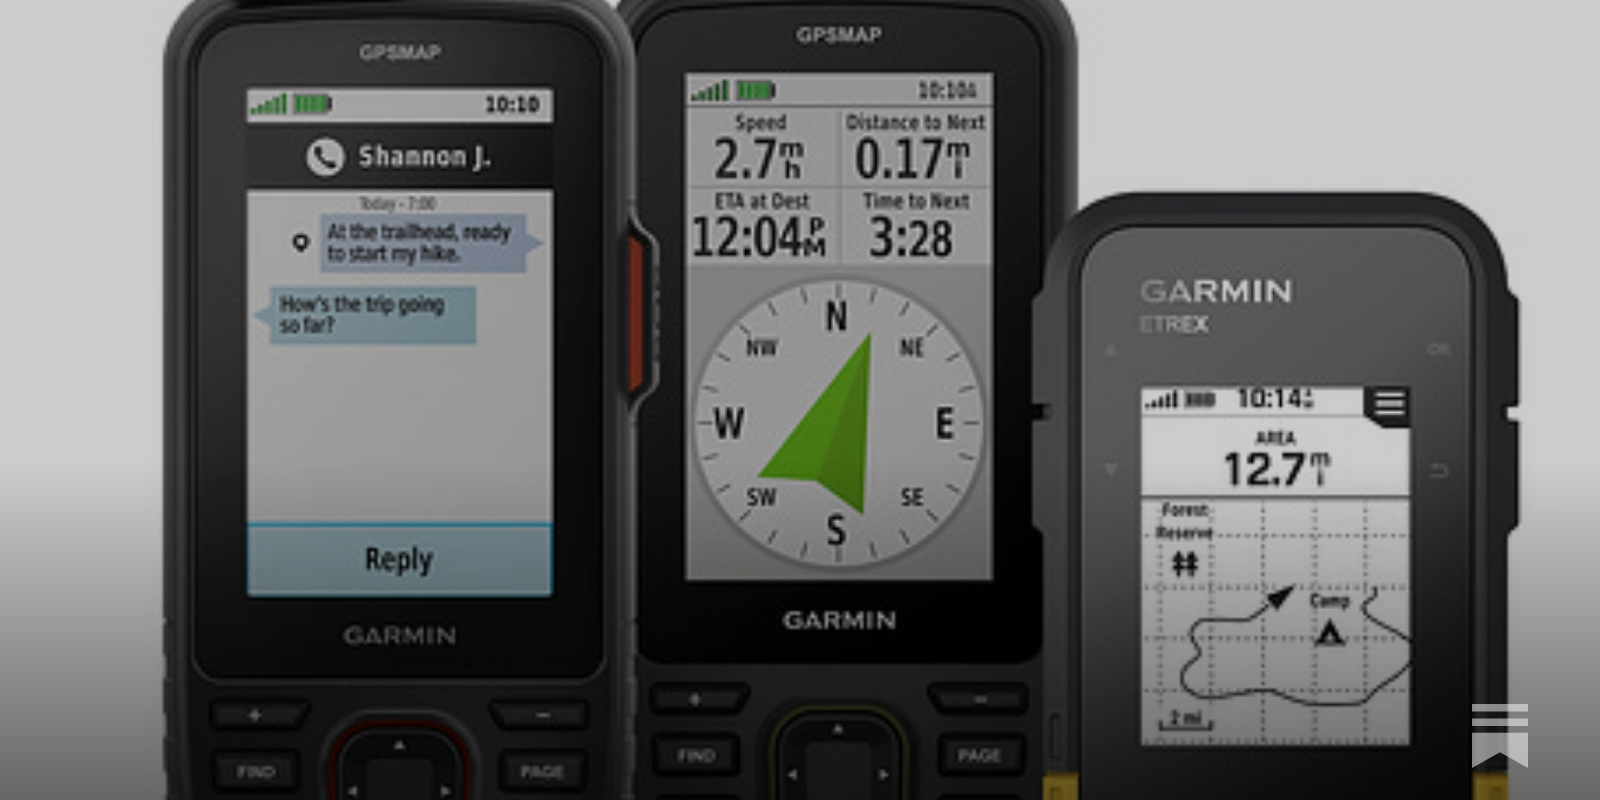 Garmin announces the GPSMAP 67 series and eTrex SE GPS handhelds